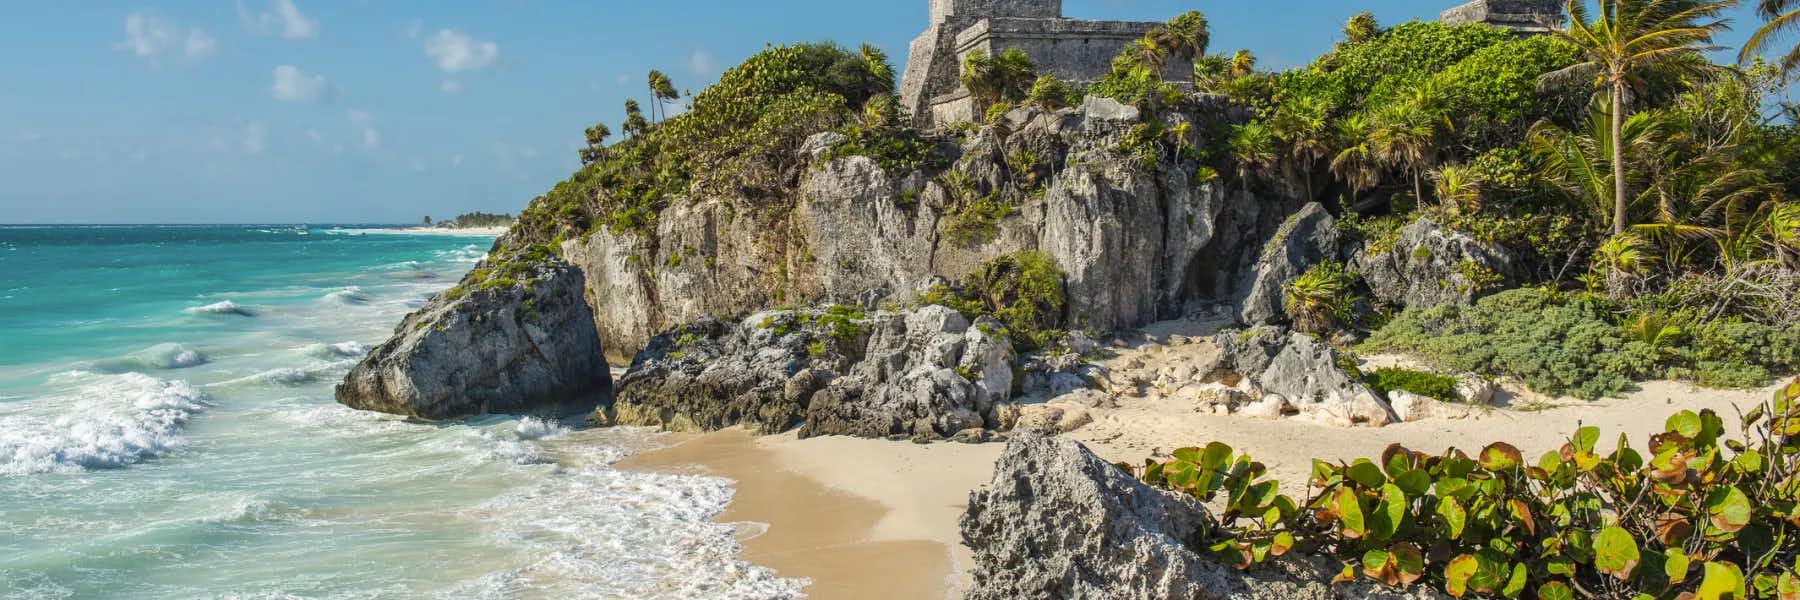 Best Beaches on the Yucatan Peninsula